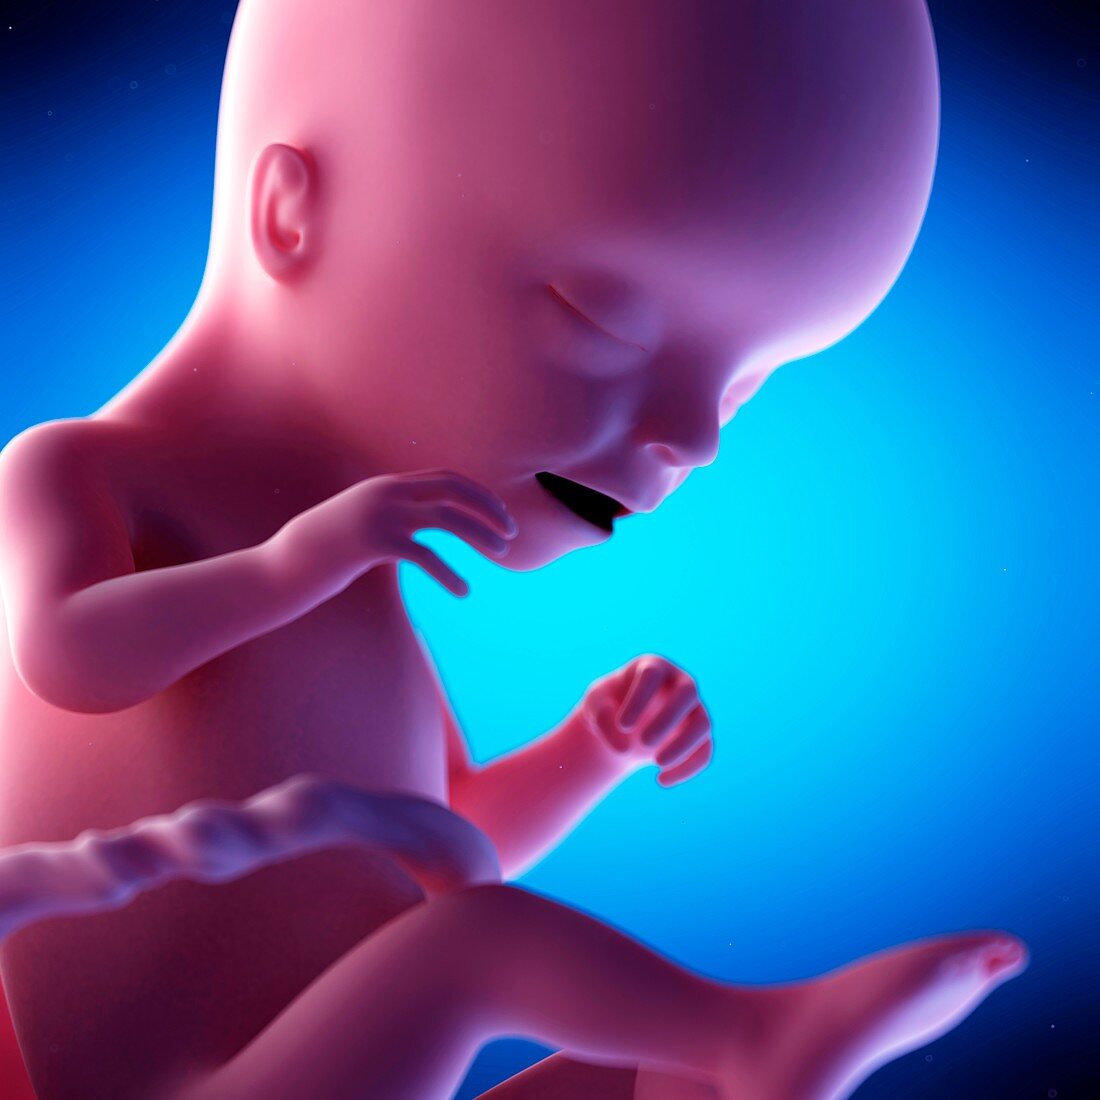 Human fetus at week 17 of gestation, illustration